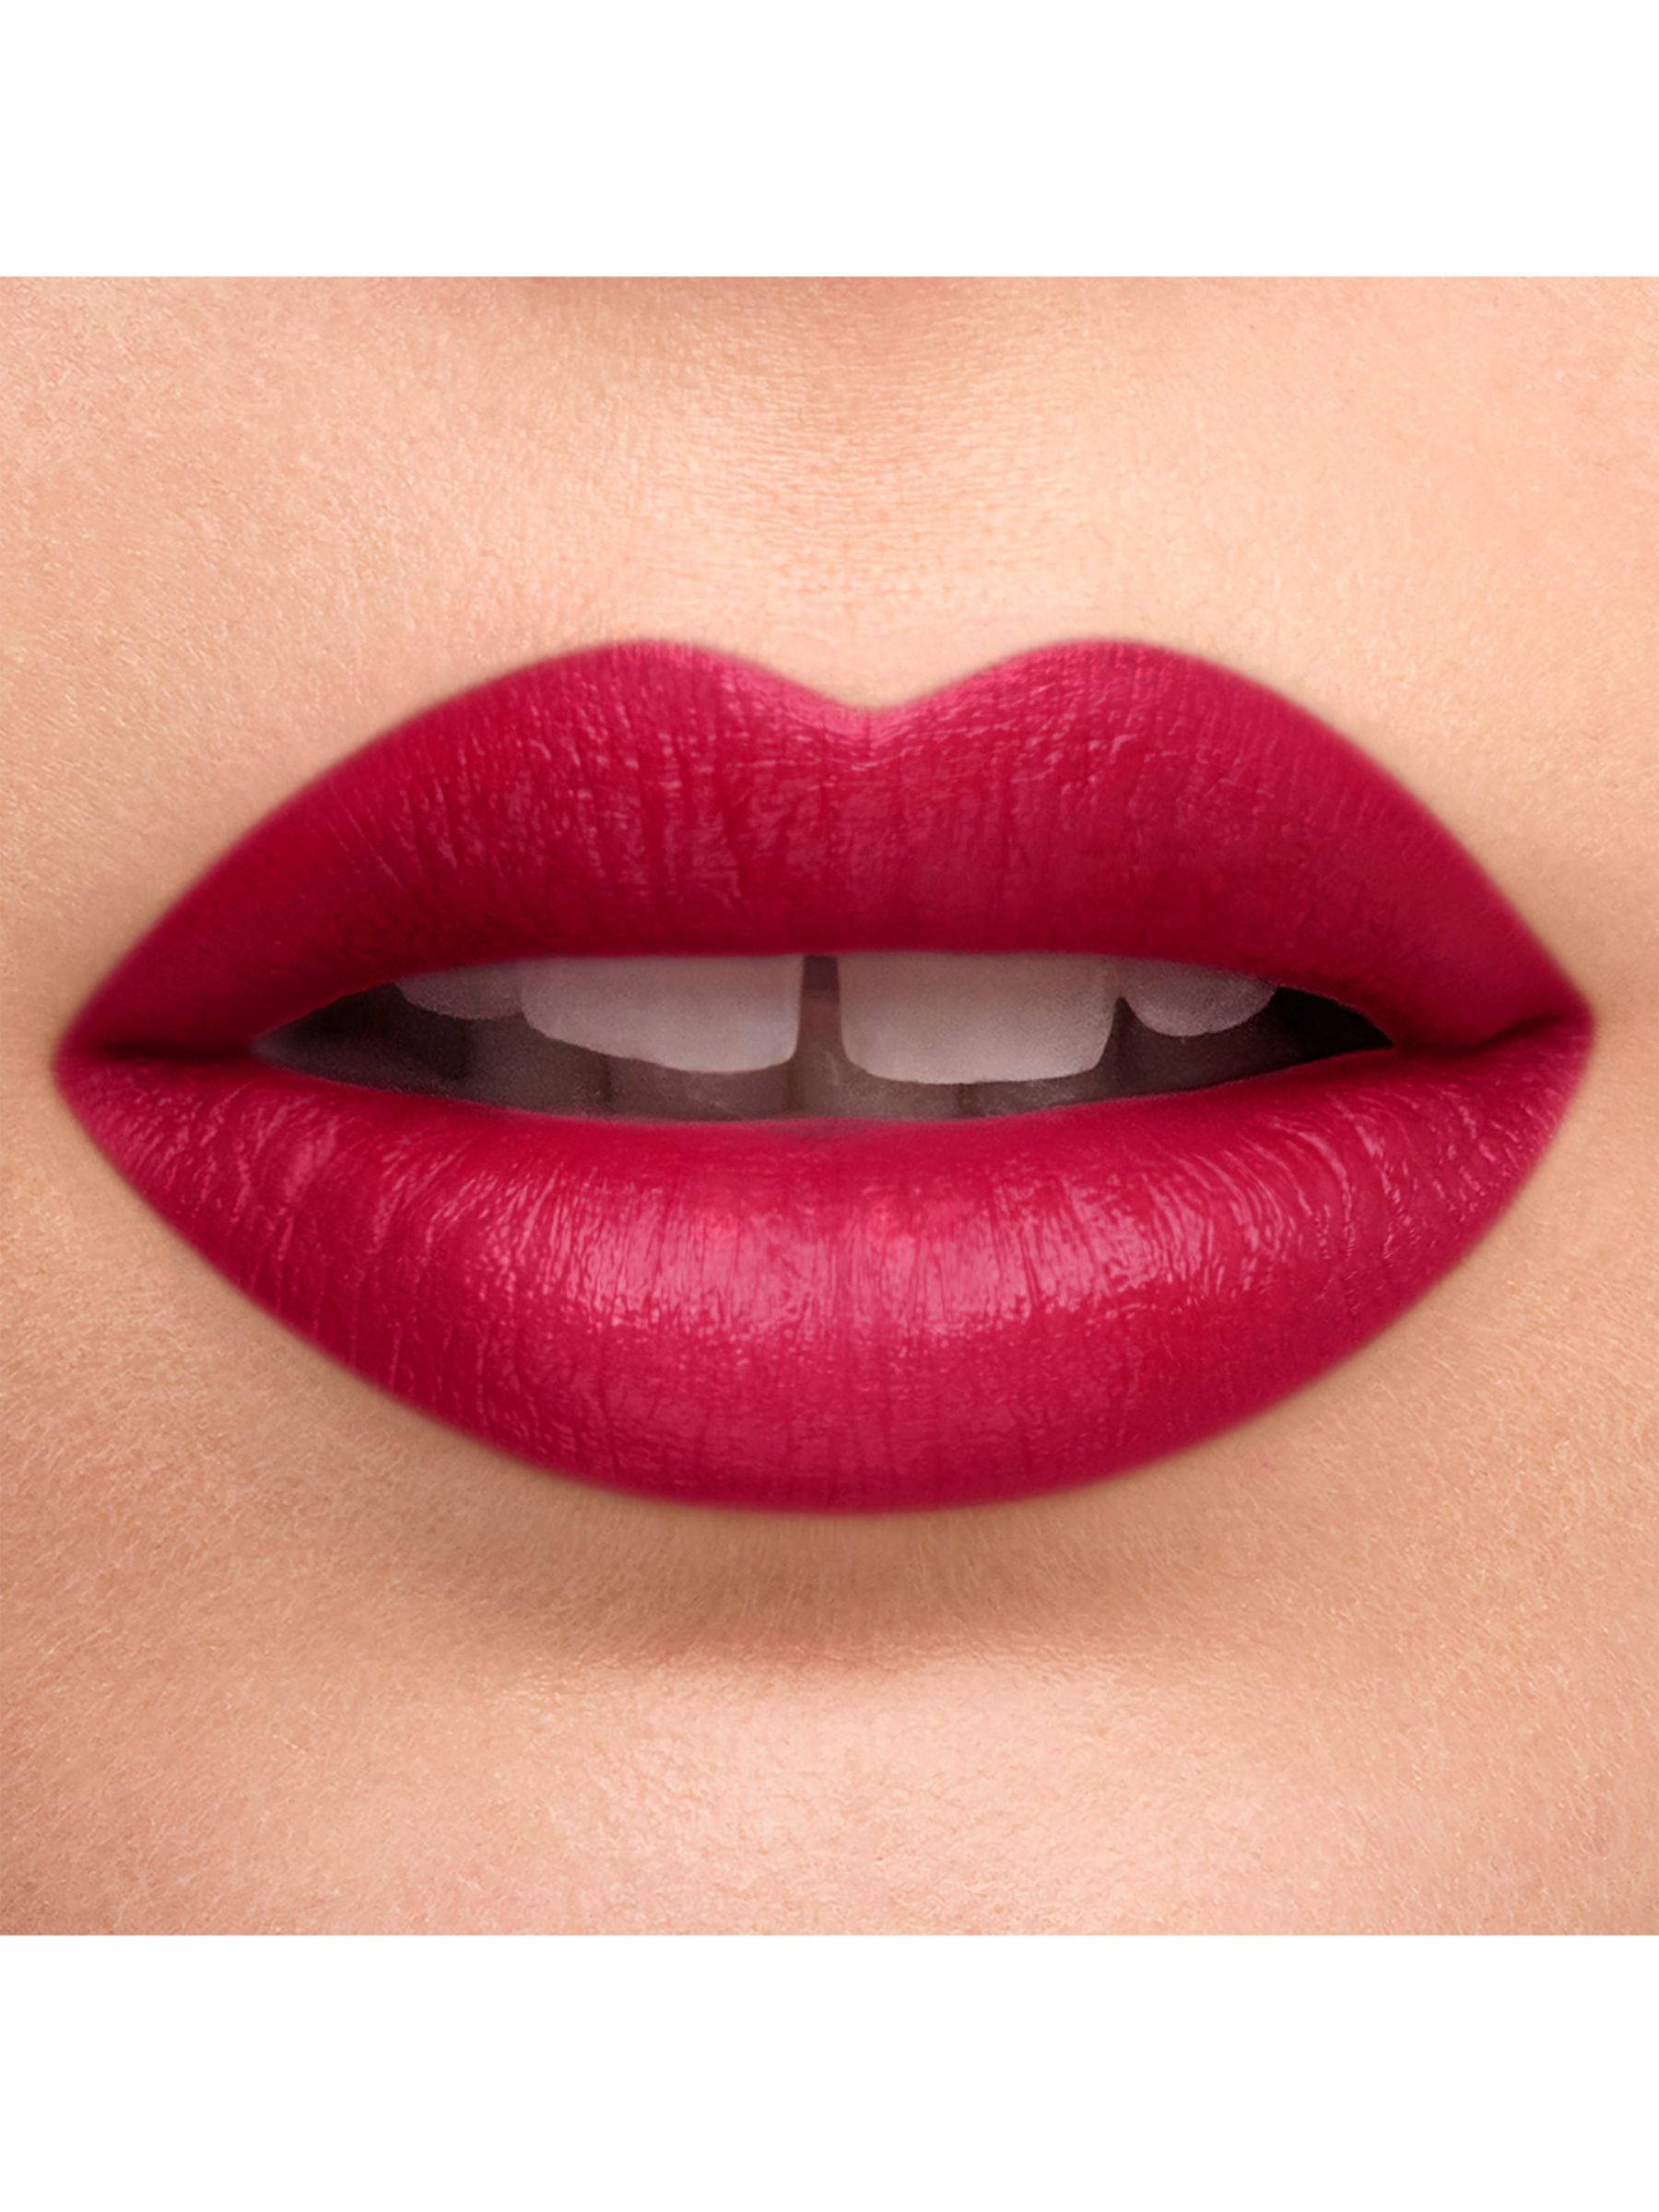 Carolina Herrera Fabulous Kiss Lipstick Cap - ShopStyle